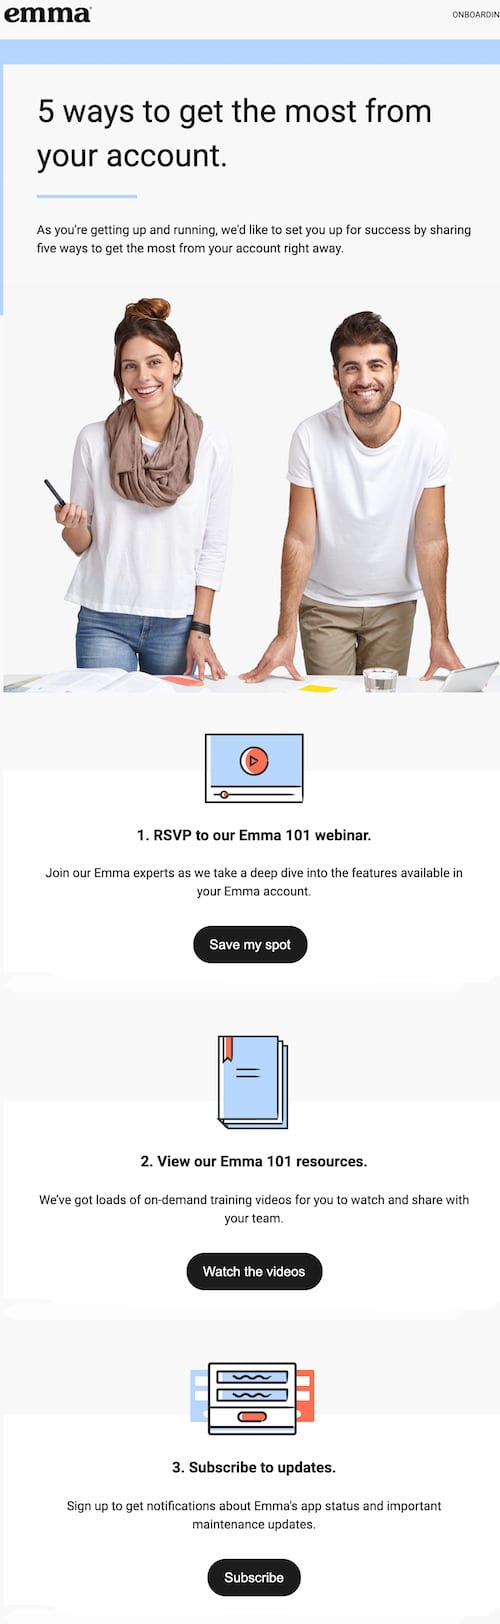 content-based-email-example: 다음은 Emma의 콘텐츠 기반 자동 이메일의 예입니다.